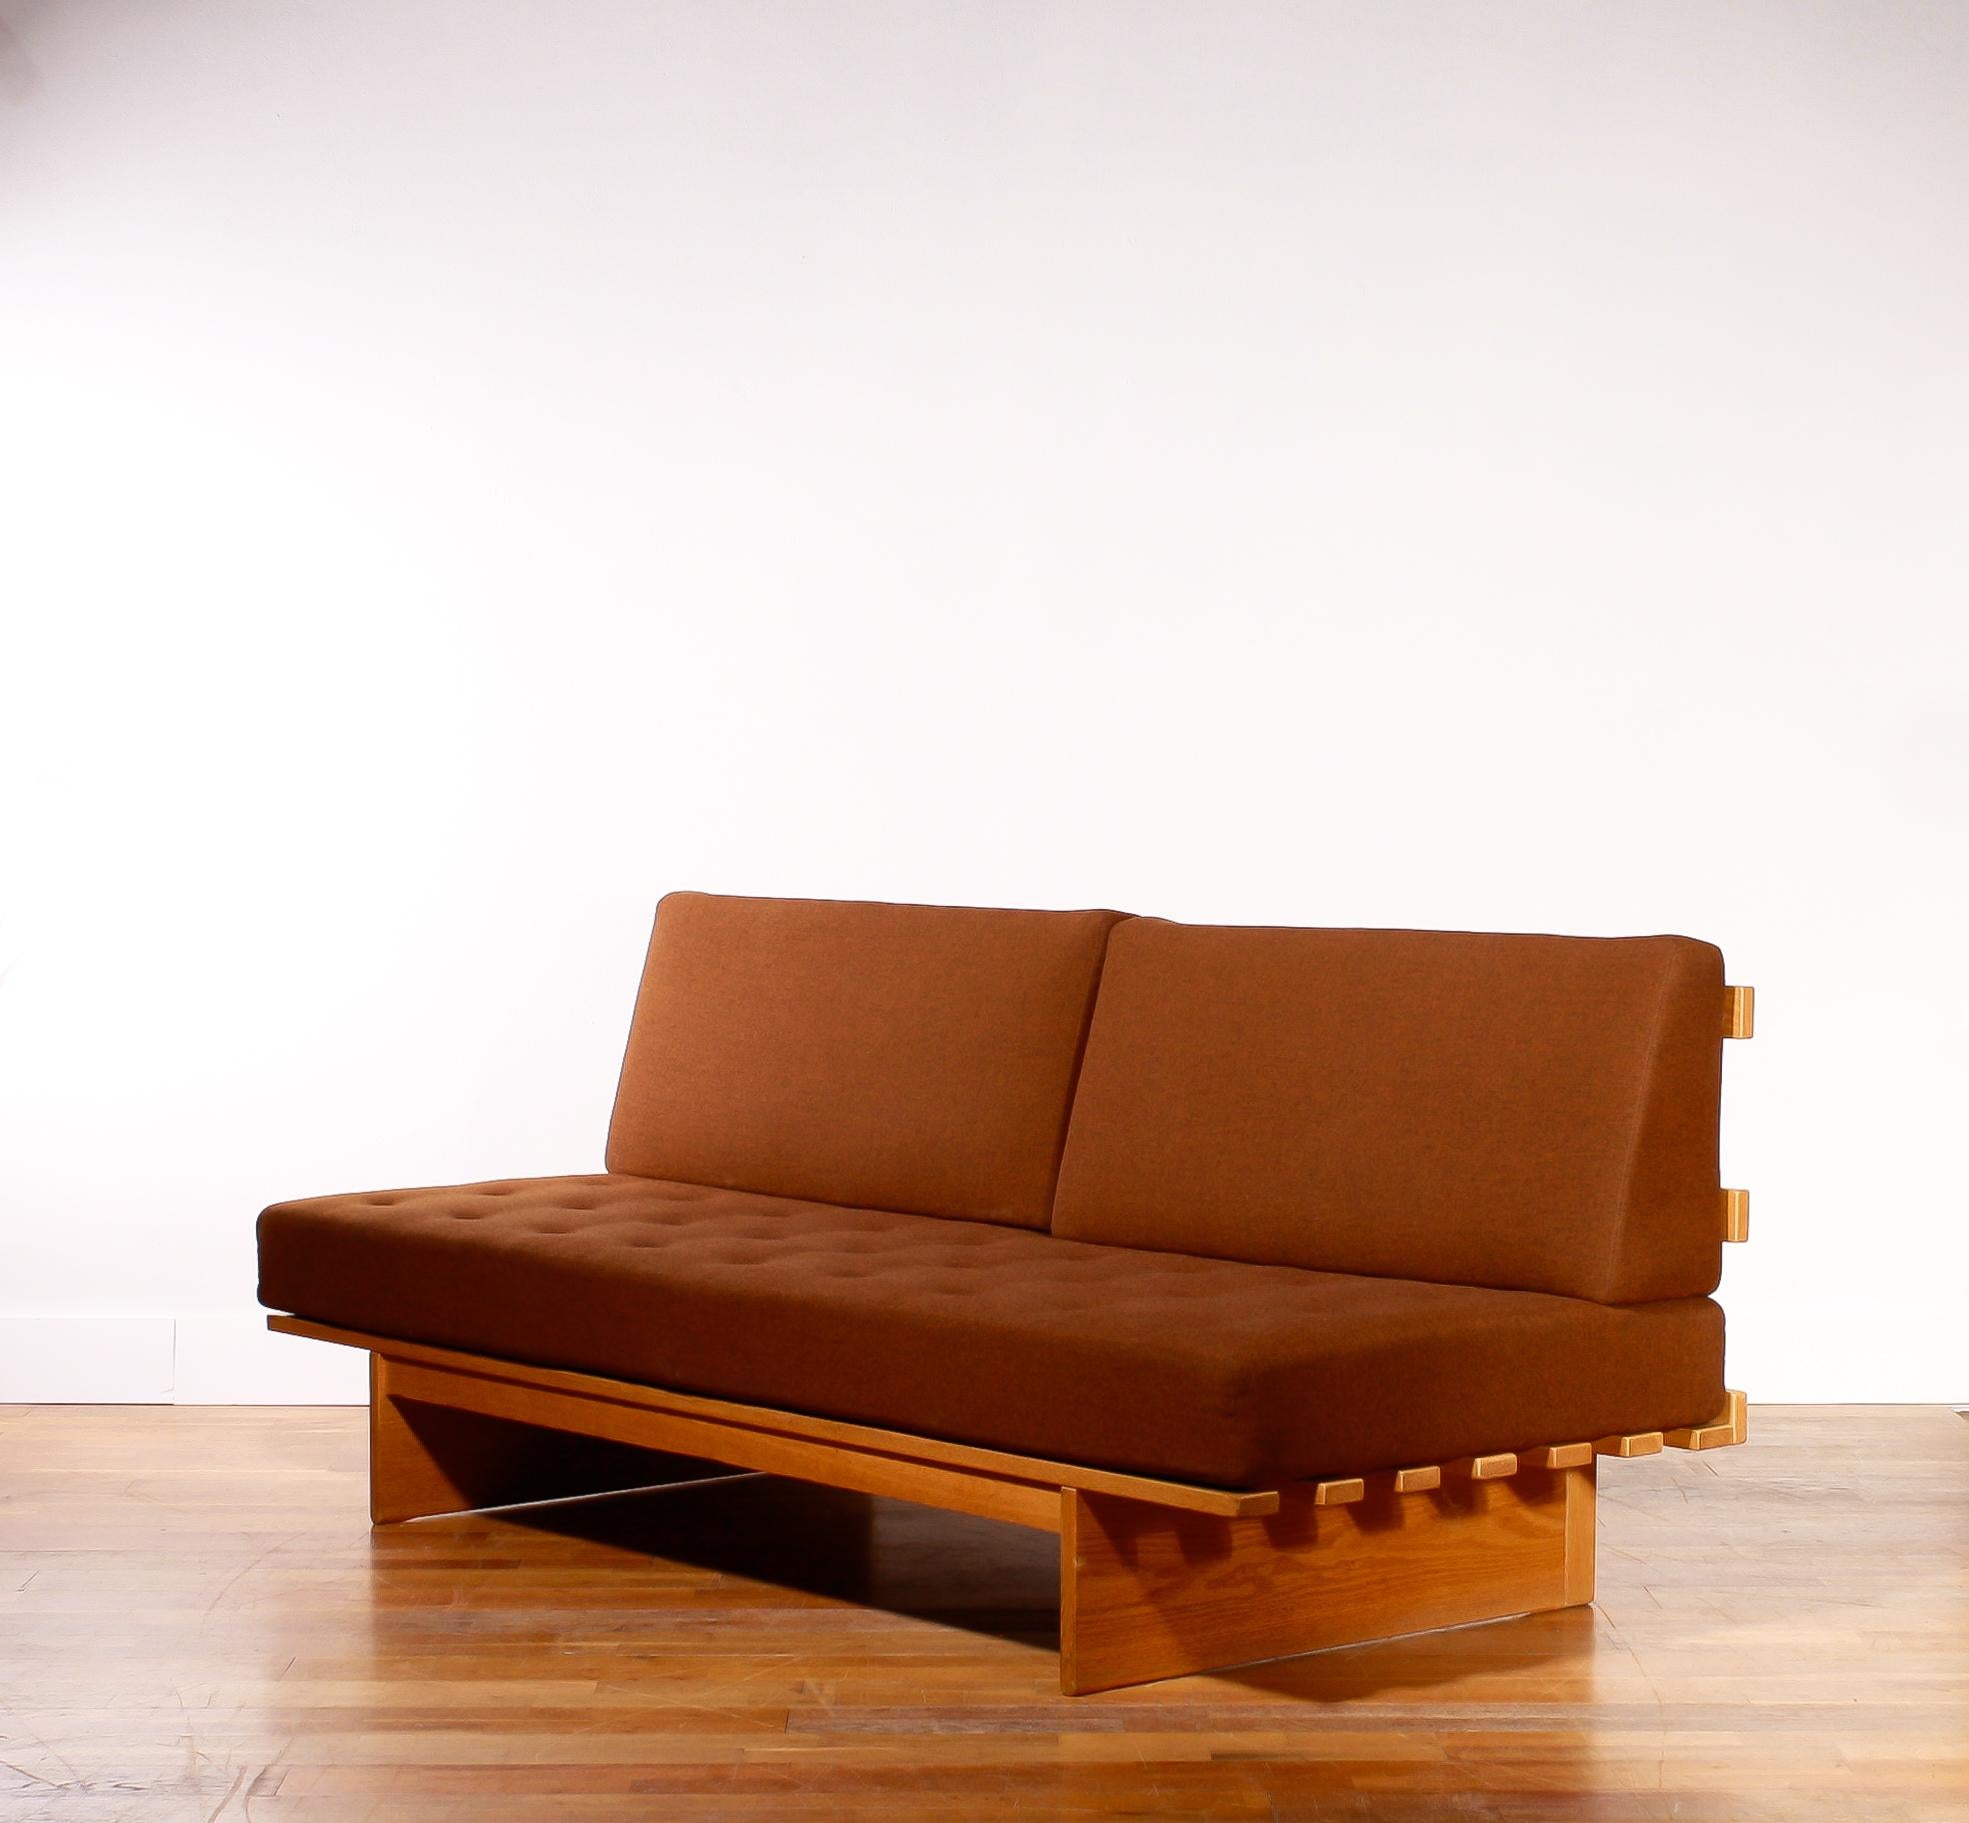 Late 20th Century 1970s Oak and Wool Sofa / Sleeper by Bra Bohag For DUX